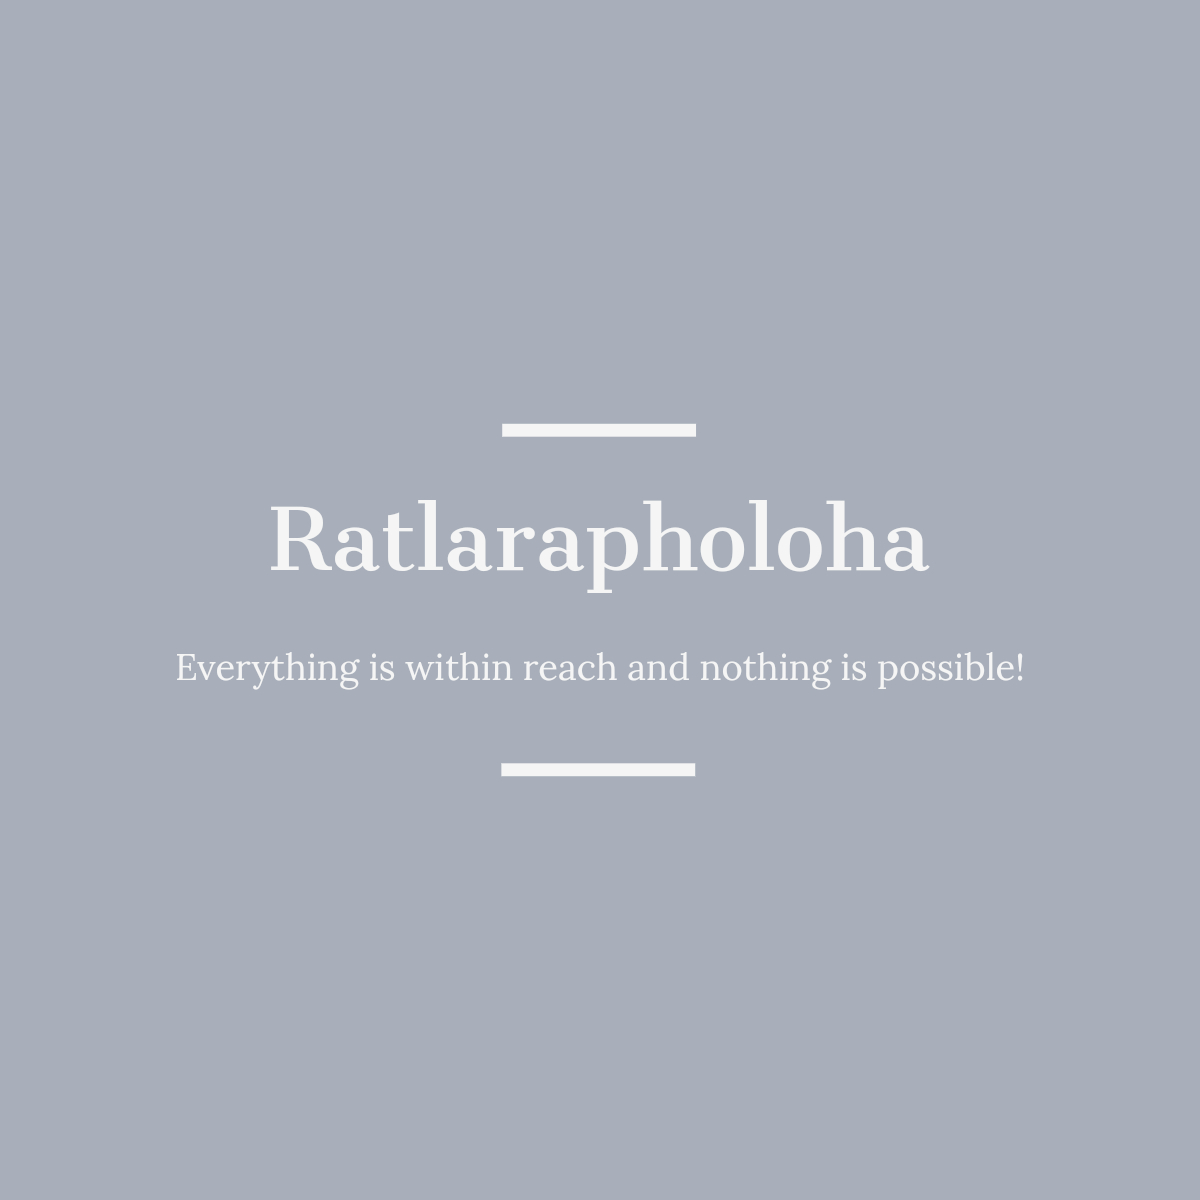 Ratlarapholoha Pty LTD